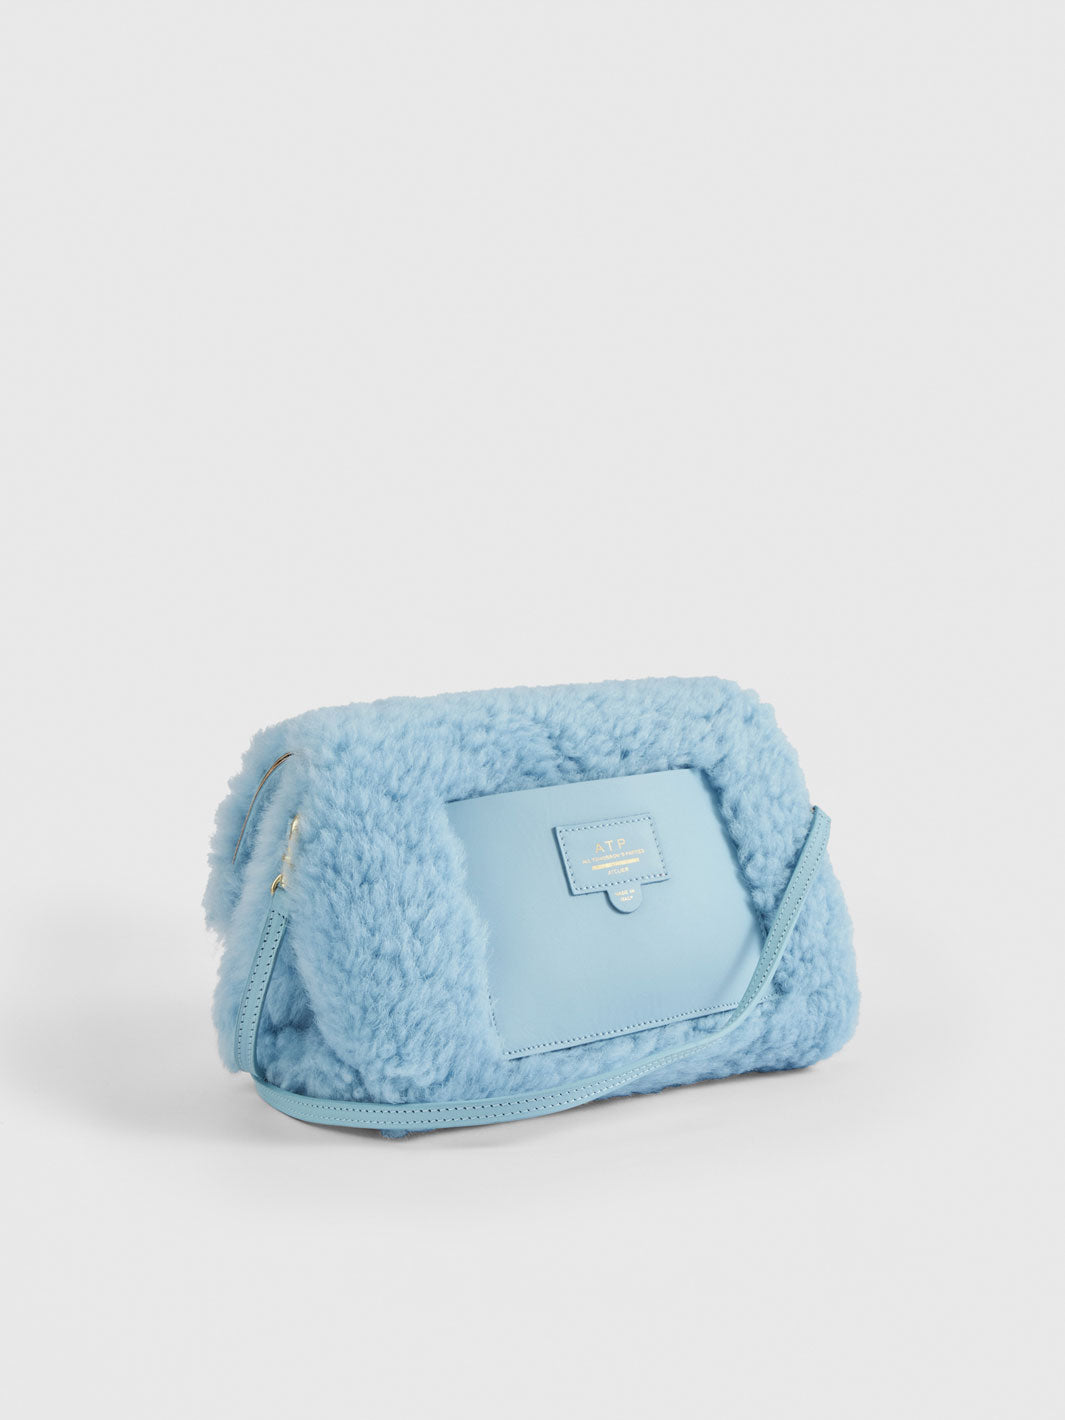 Corinaldo Baby Blue Shearling Pouch Bag